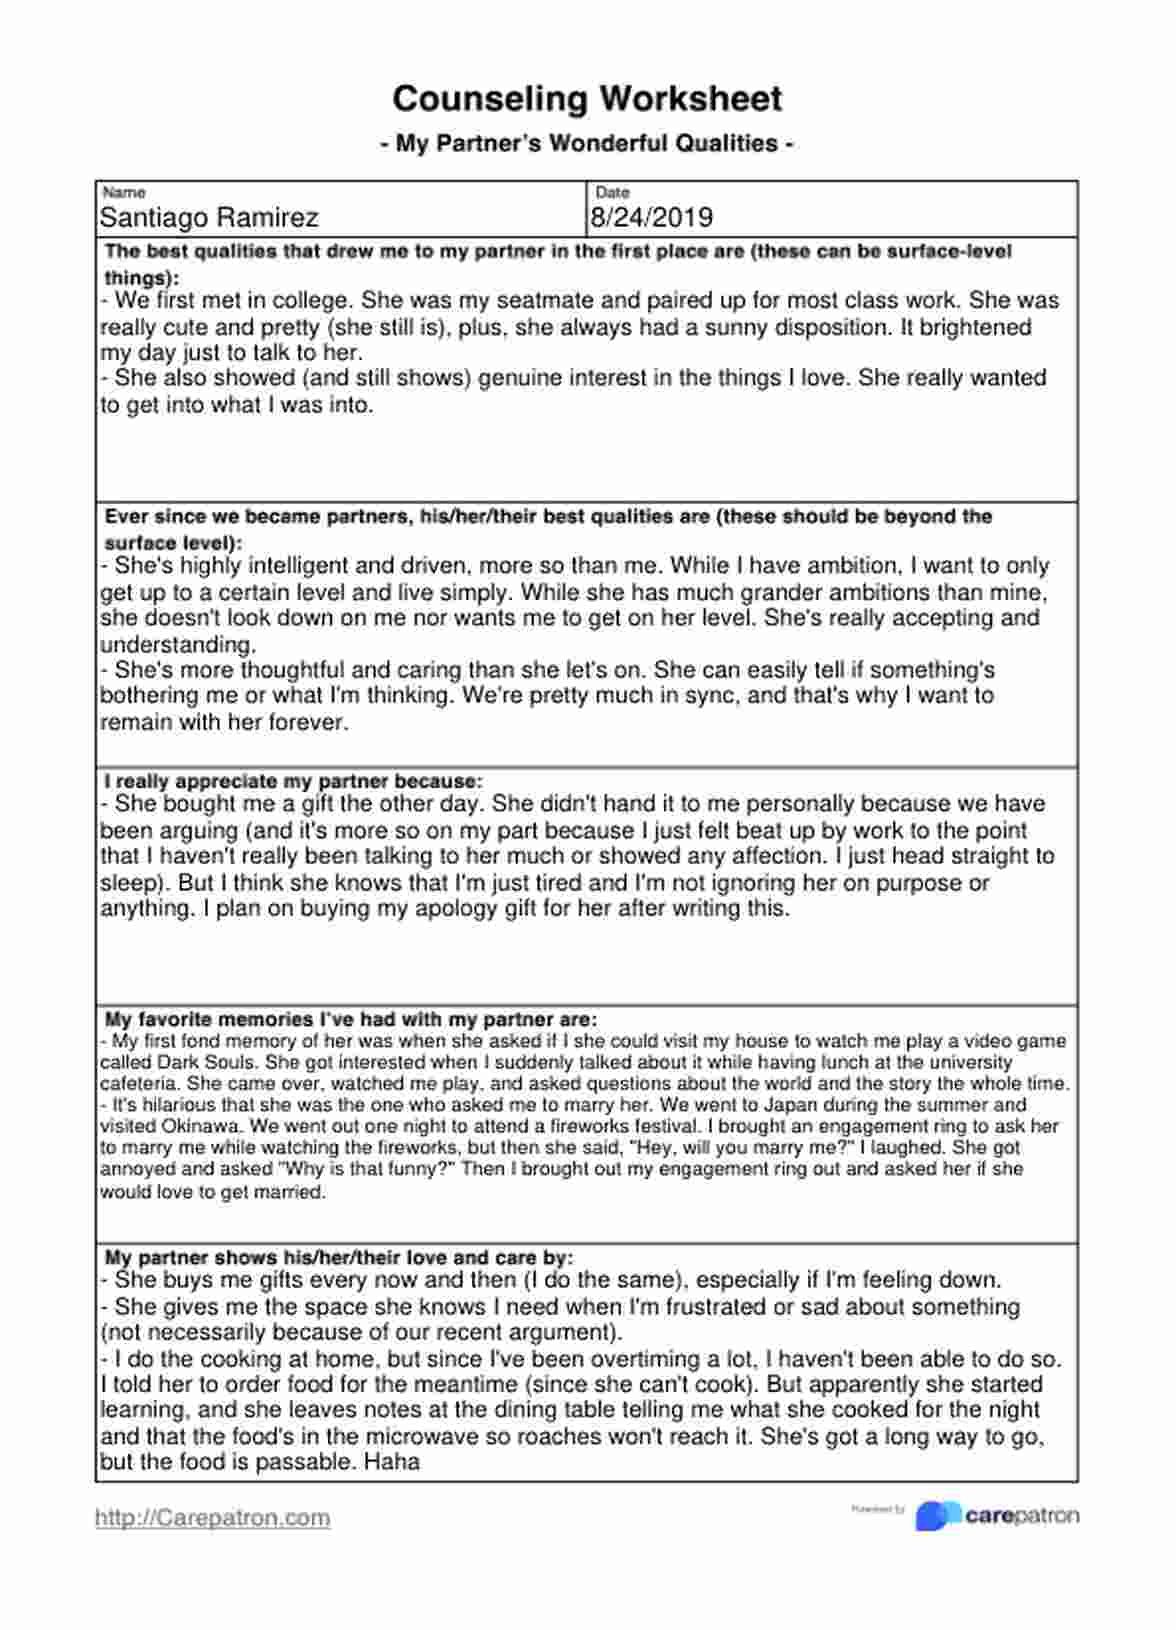 Counseling Worksheet PDF Example